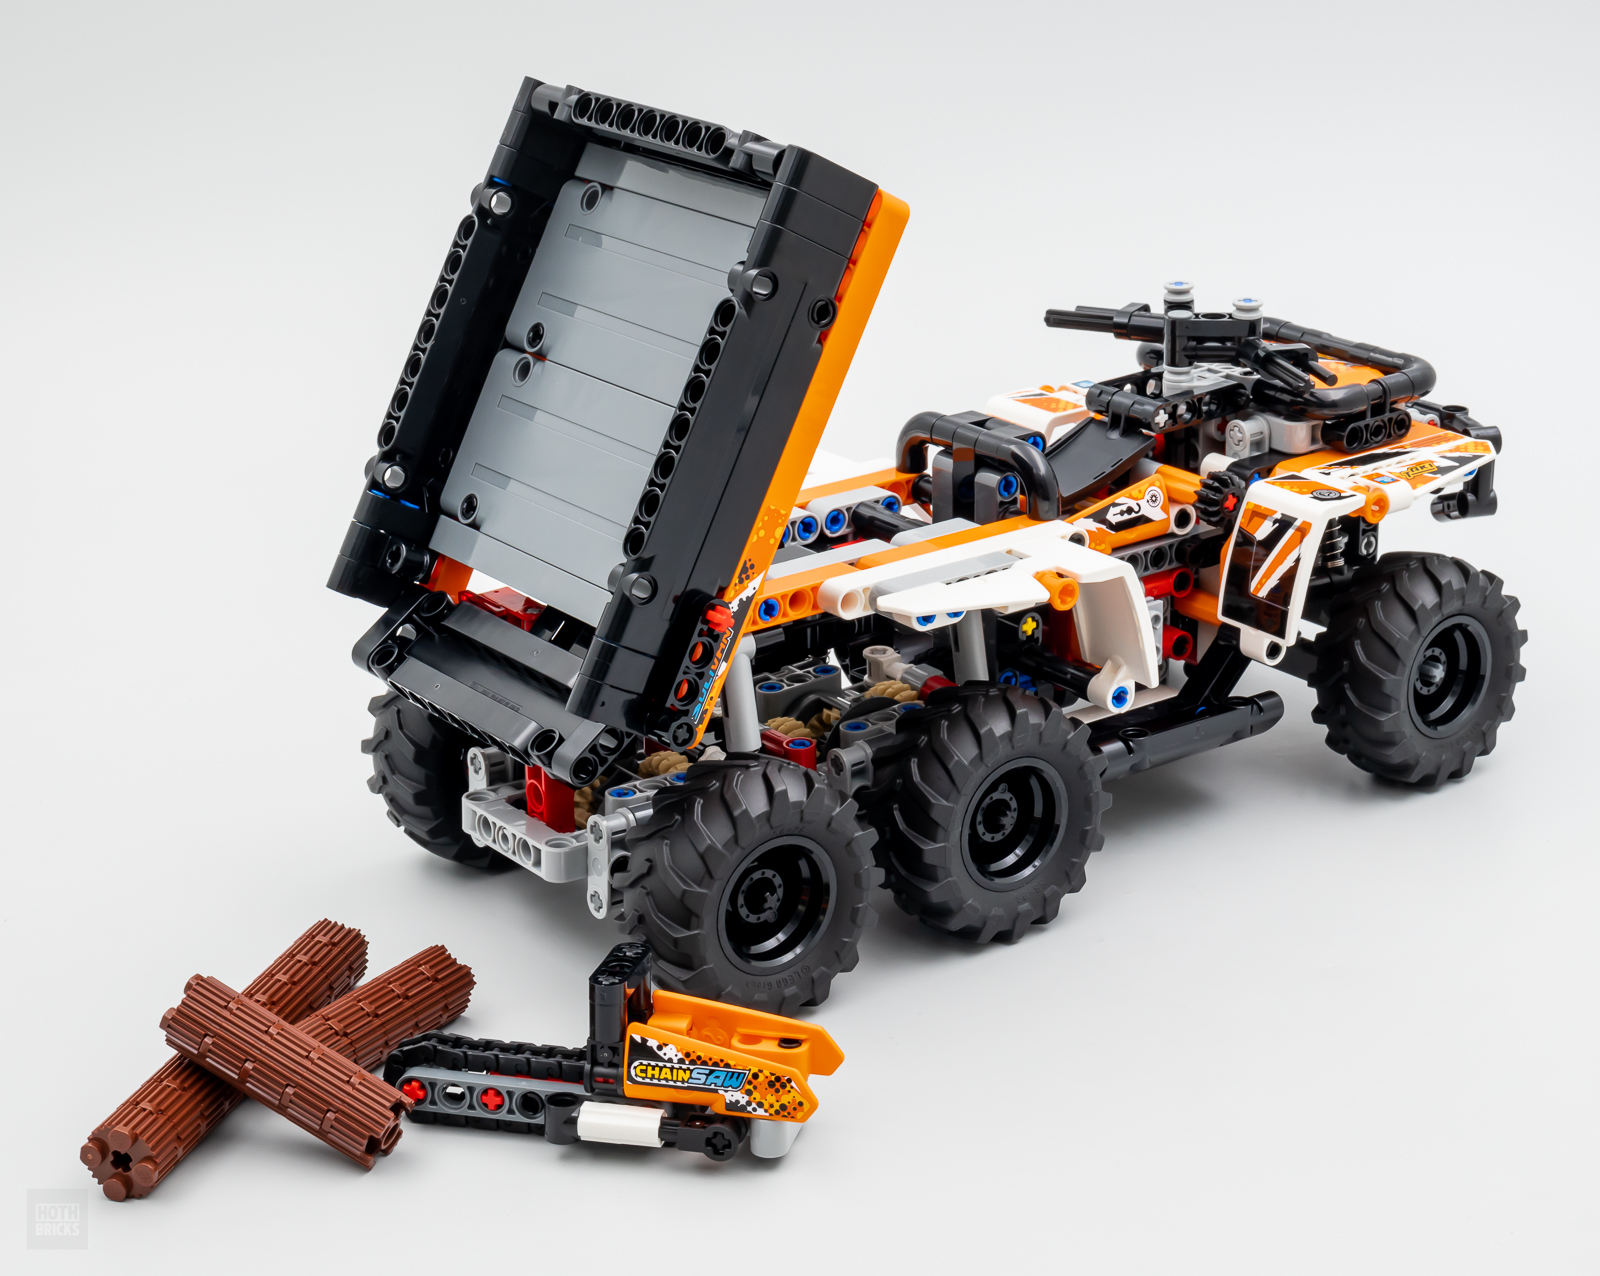 Le véhicule tout-terrain - LEGO® Technic - 42139